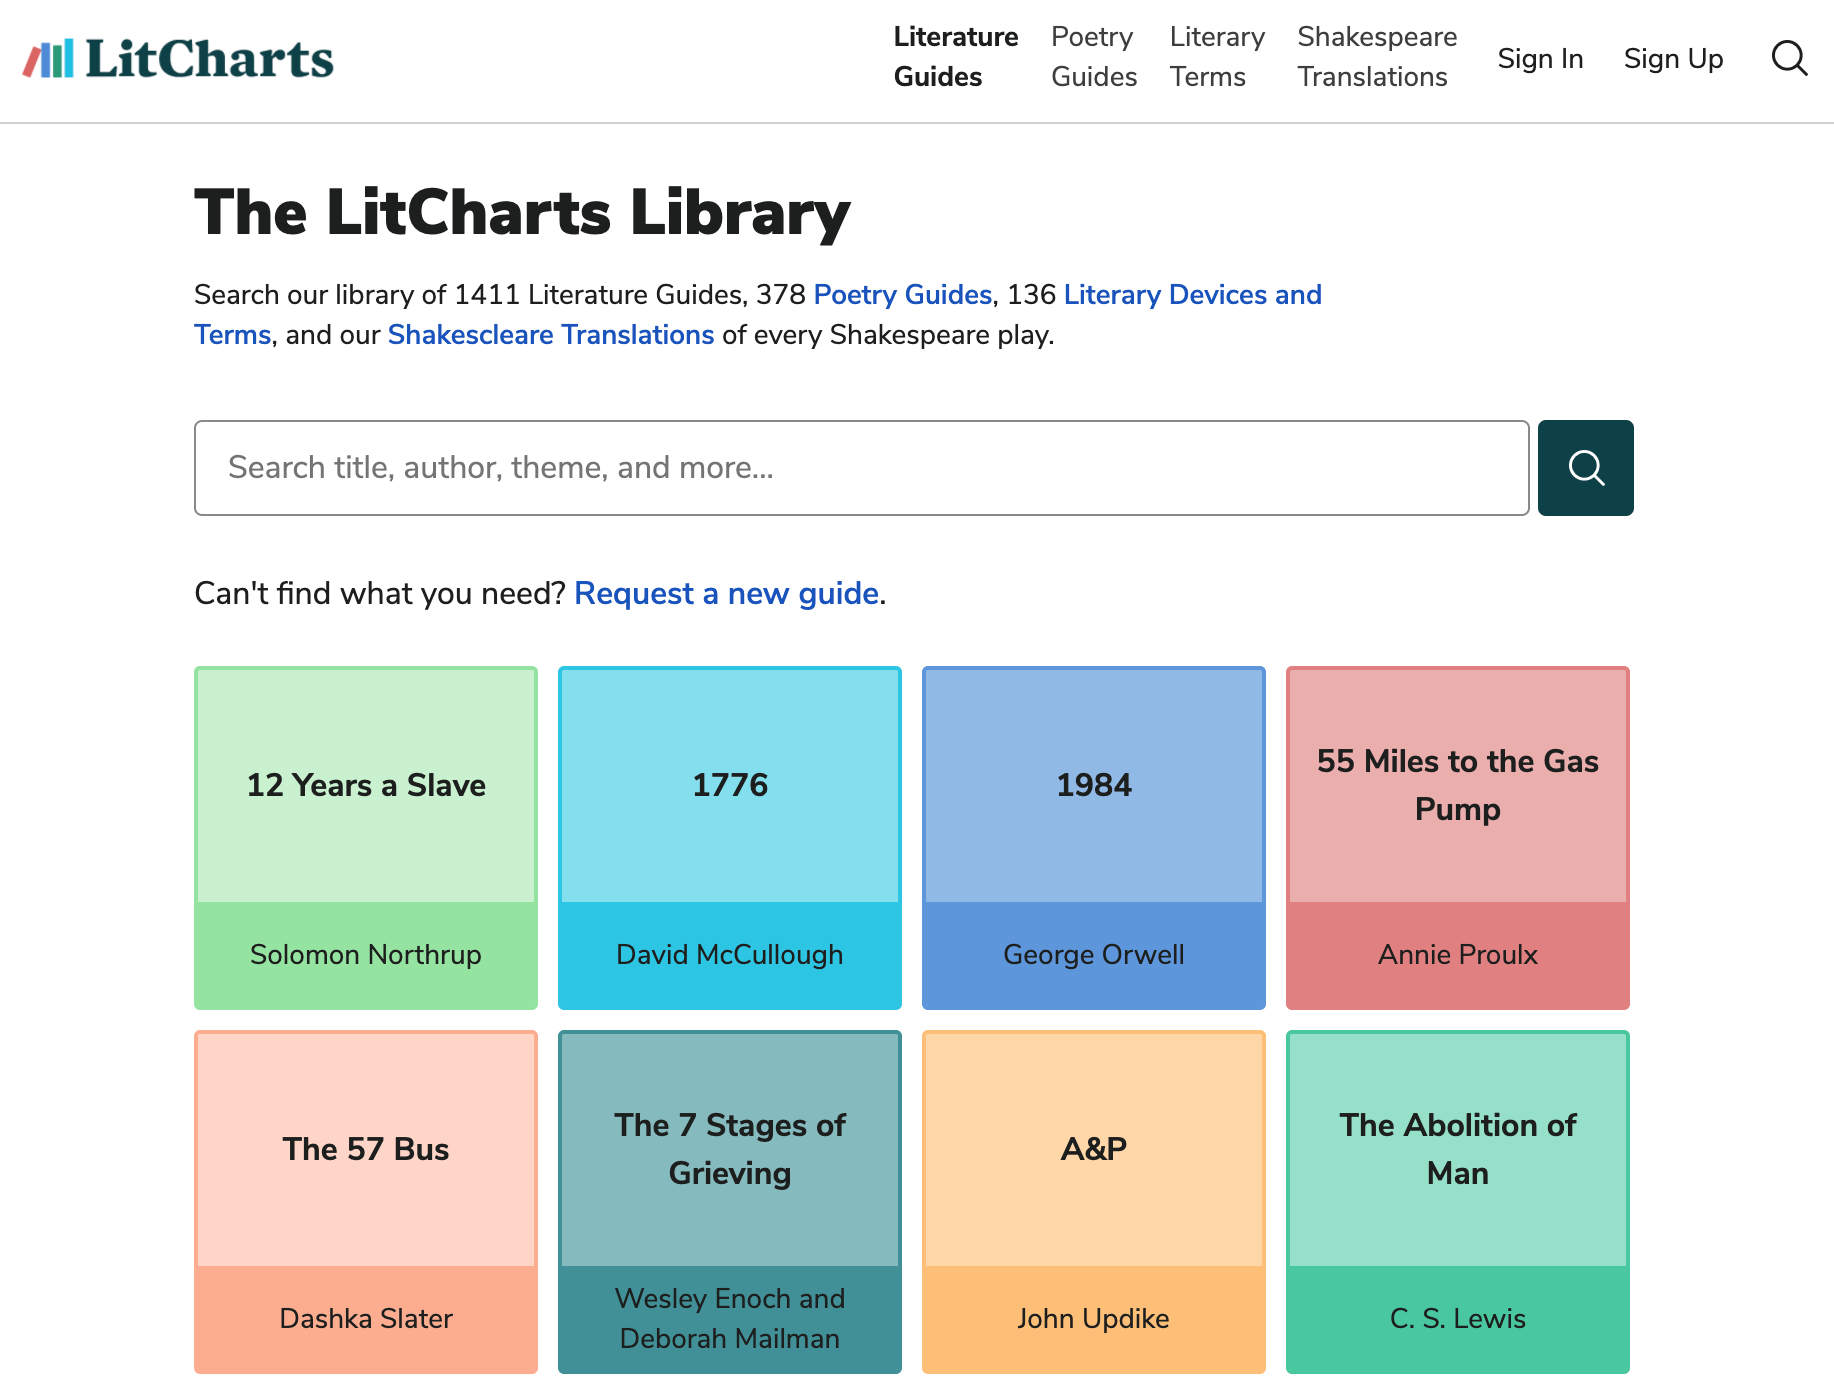 A screenshot of the LitCharts homepage